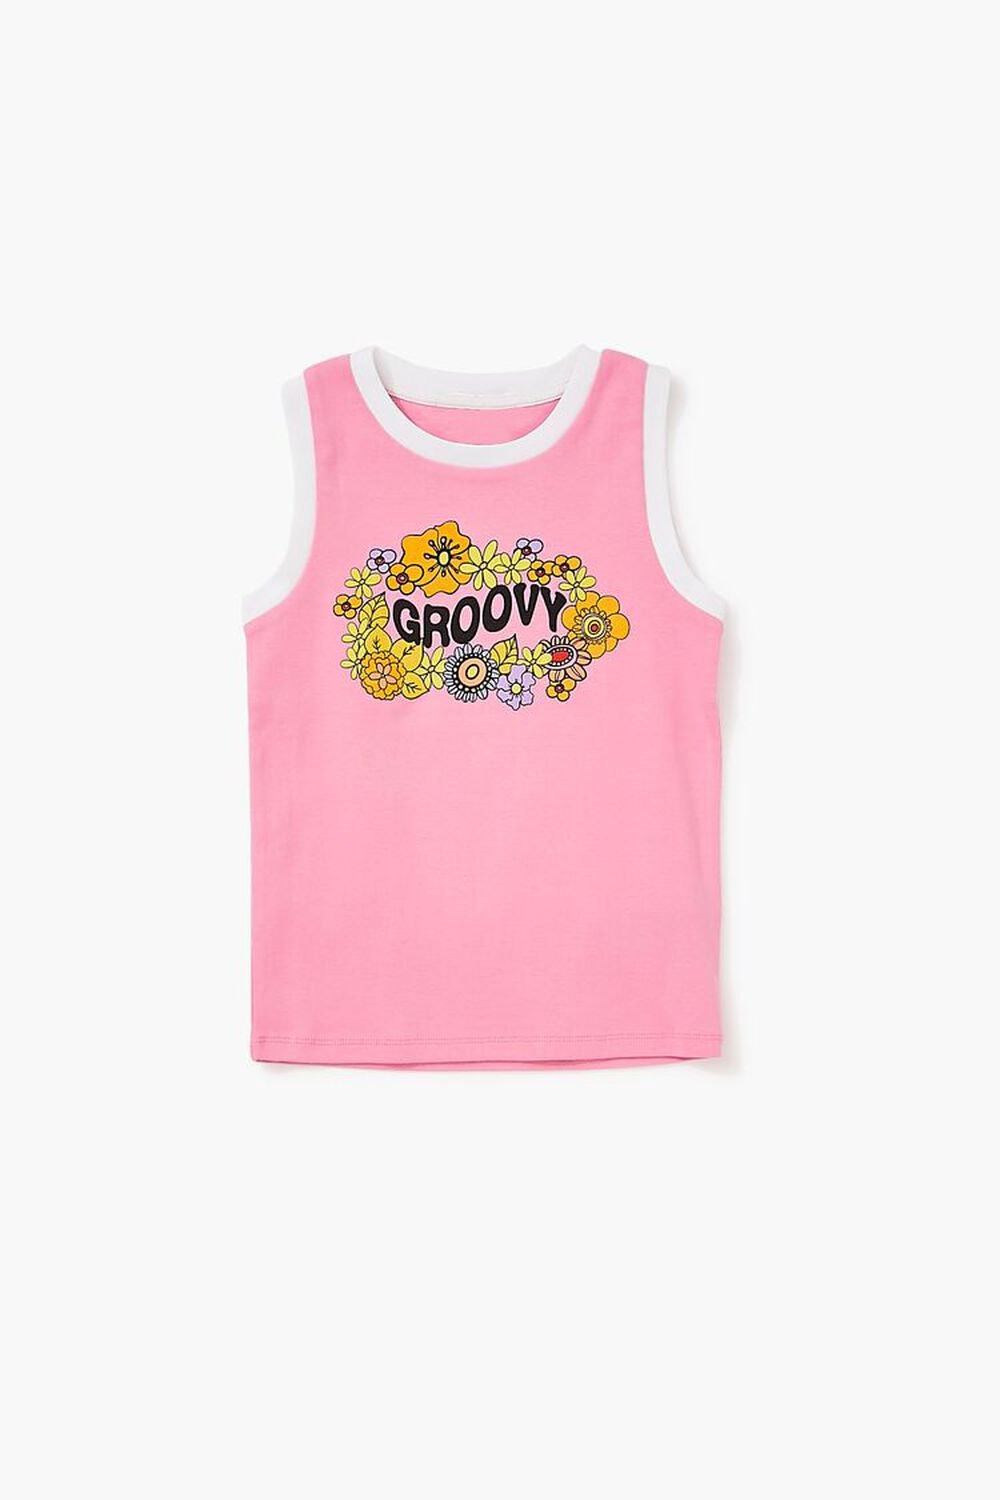 PINK/MULTI Girls Groovy Graphic Tank Top (Kids), image 1